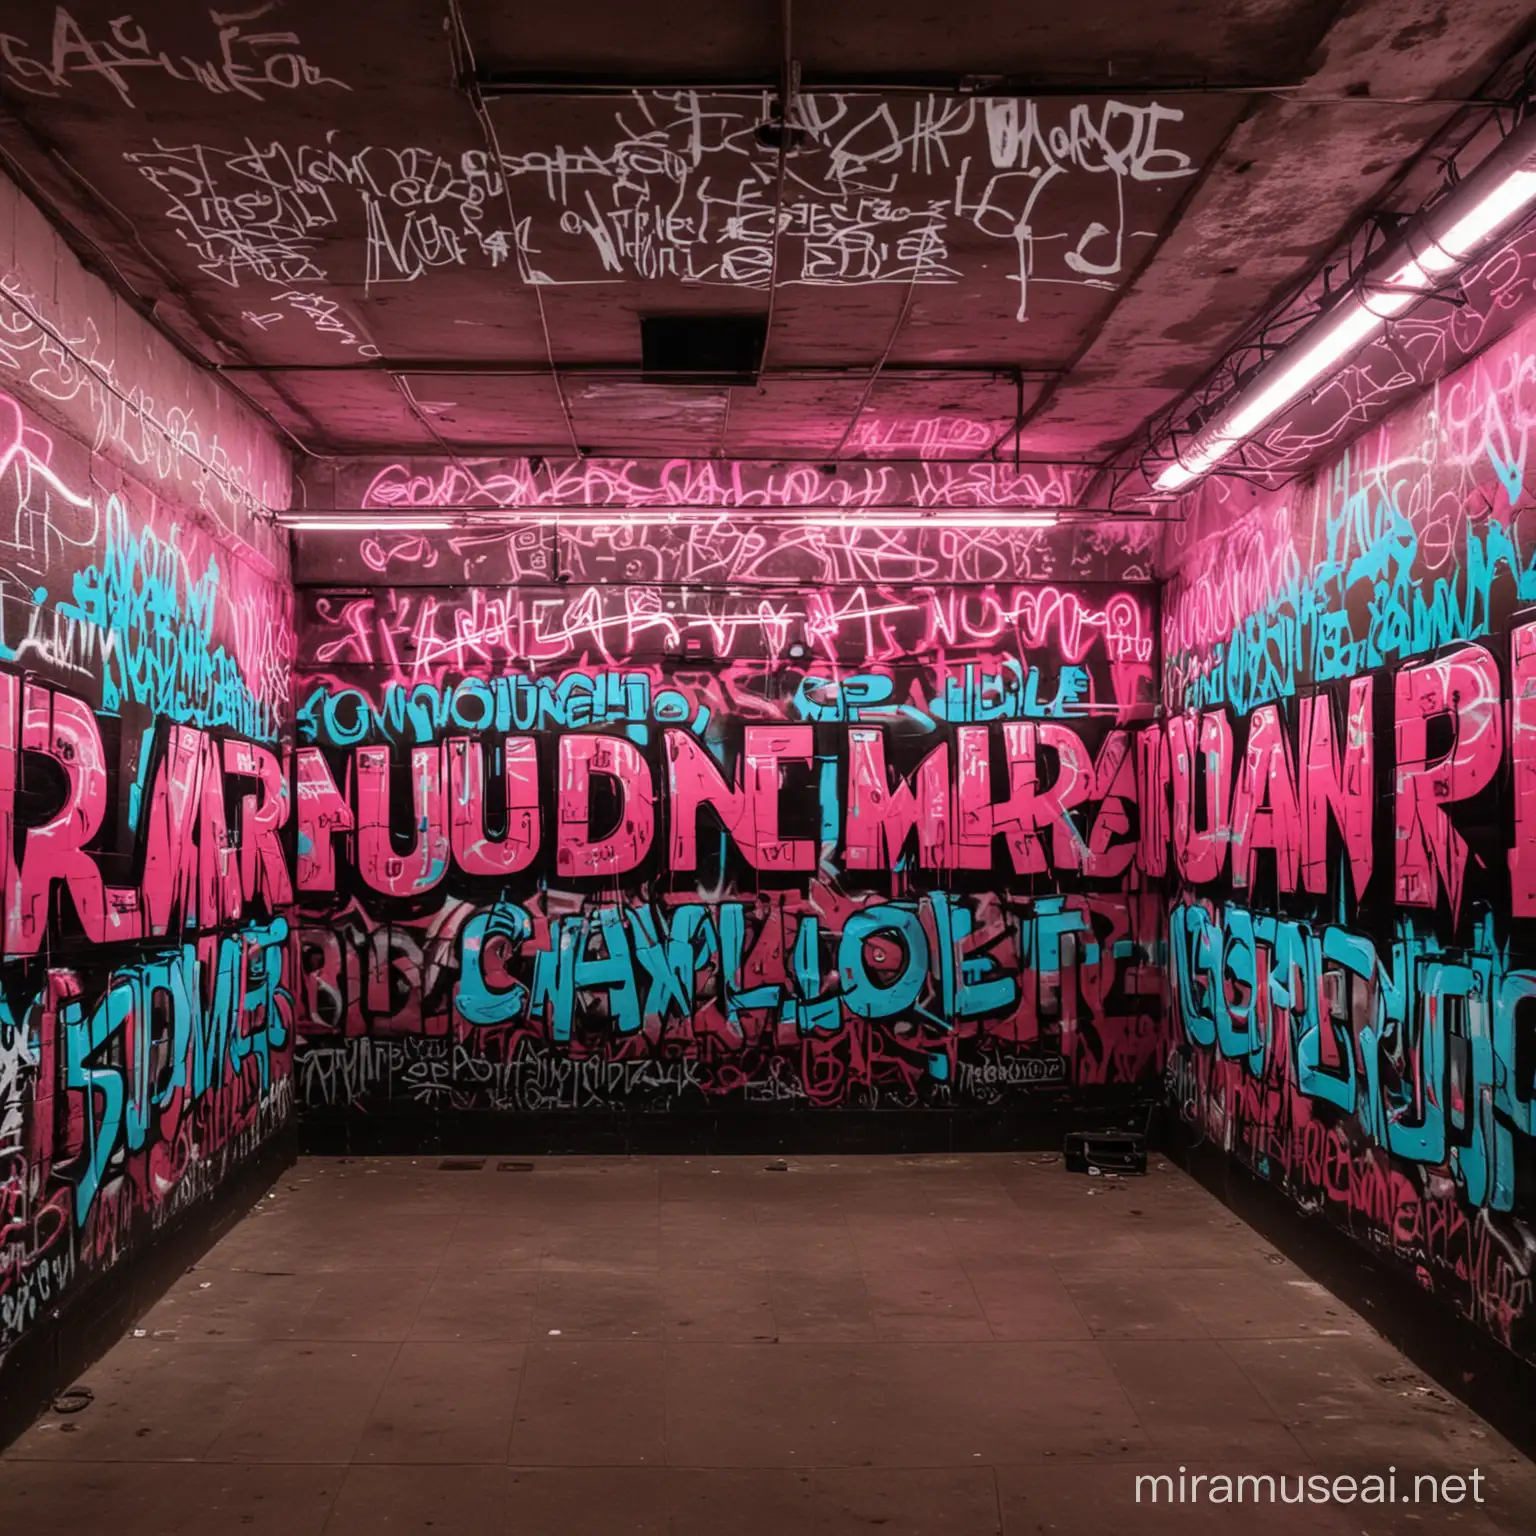 Neon Graffiti Wall Art in Underground Clubs Vibrant Urban Subculture Scene